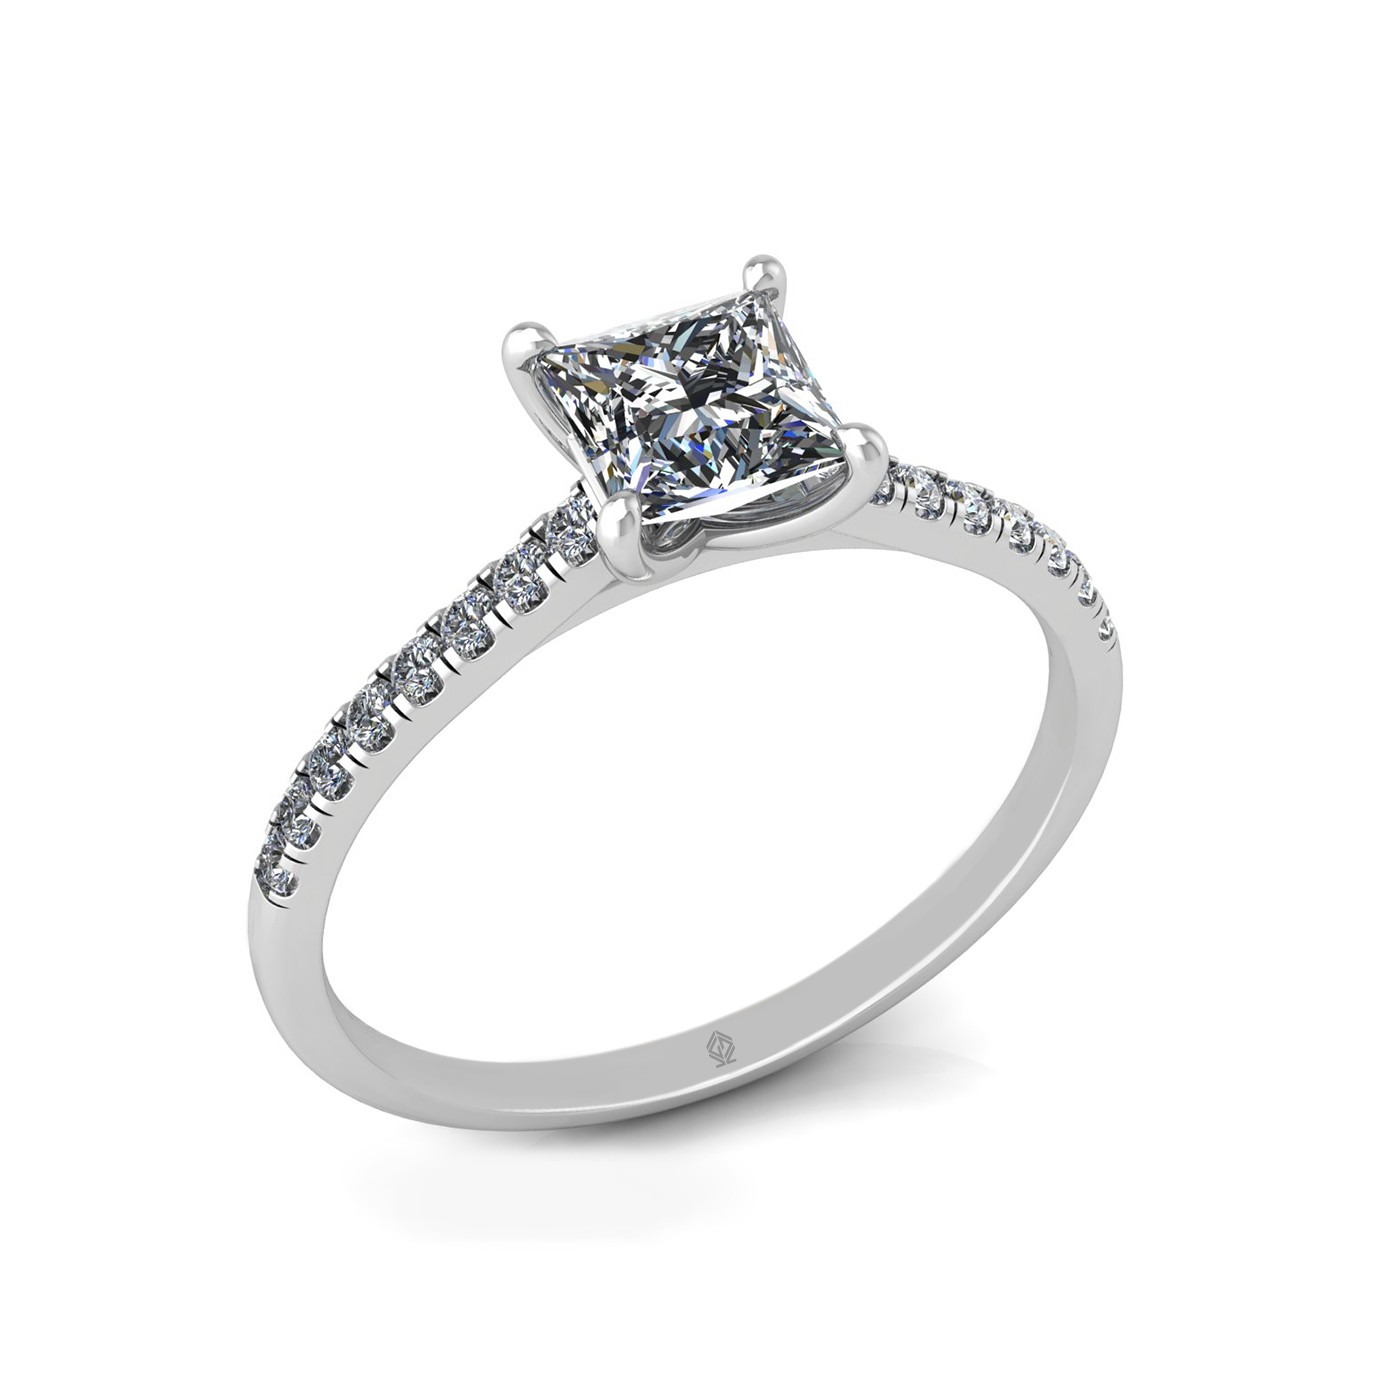 18k white gold 0,80 ct 4 prongs princess cut diamond engagement ring with whisper thin pavÉ set band